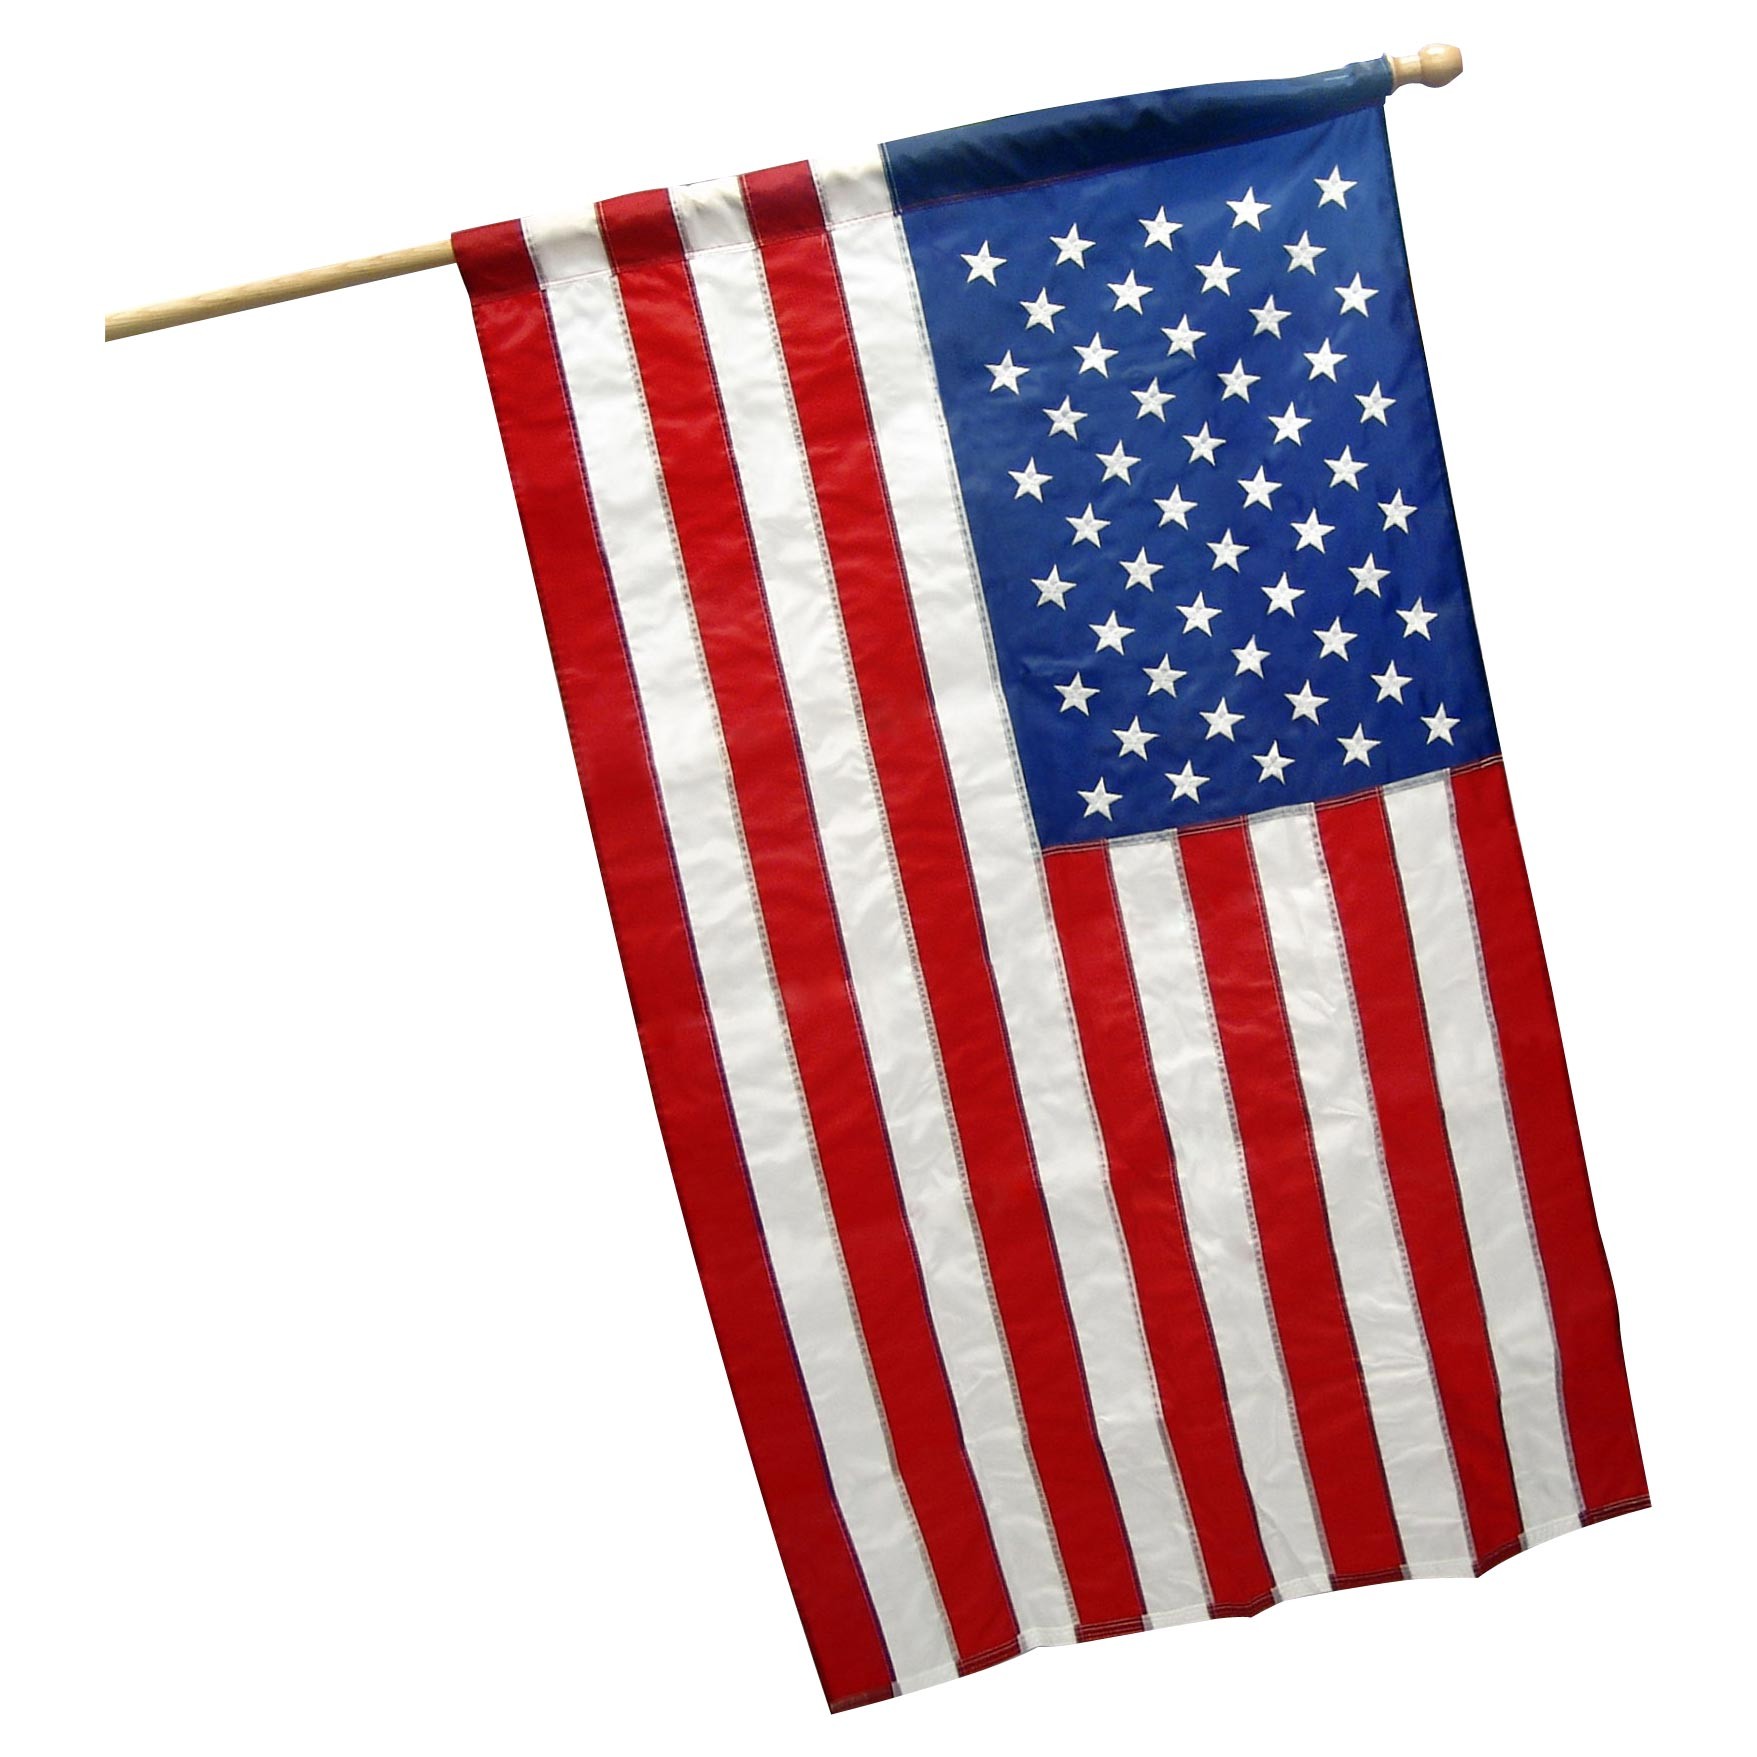 USA 2 1/2 x 4 Sewn Polyester OLS Brand Banner Flag Kit